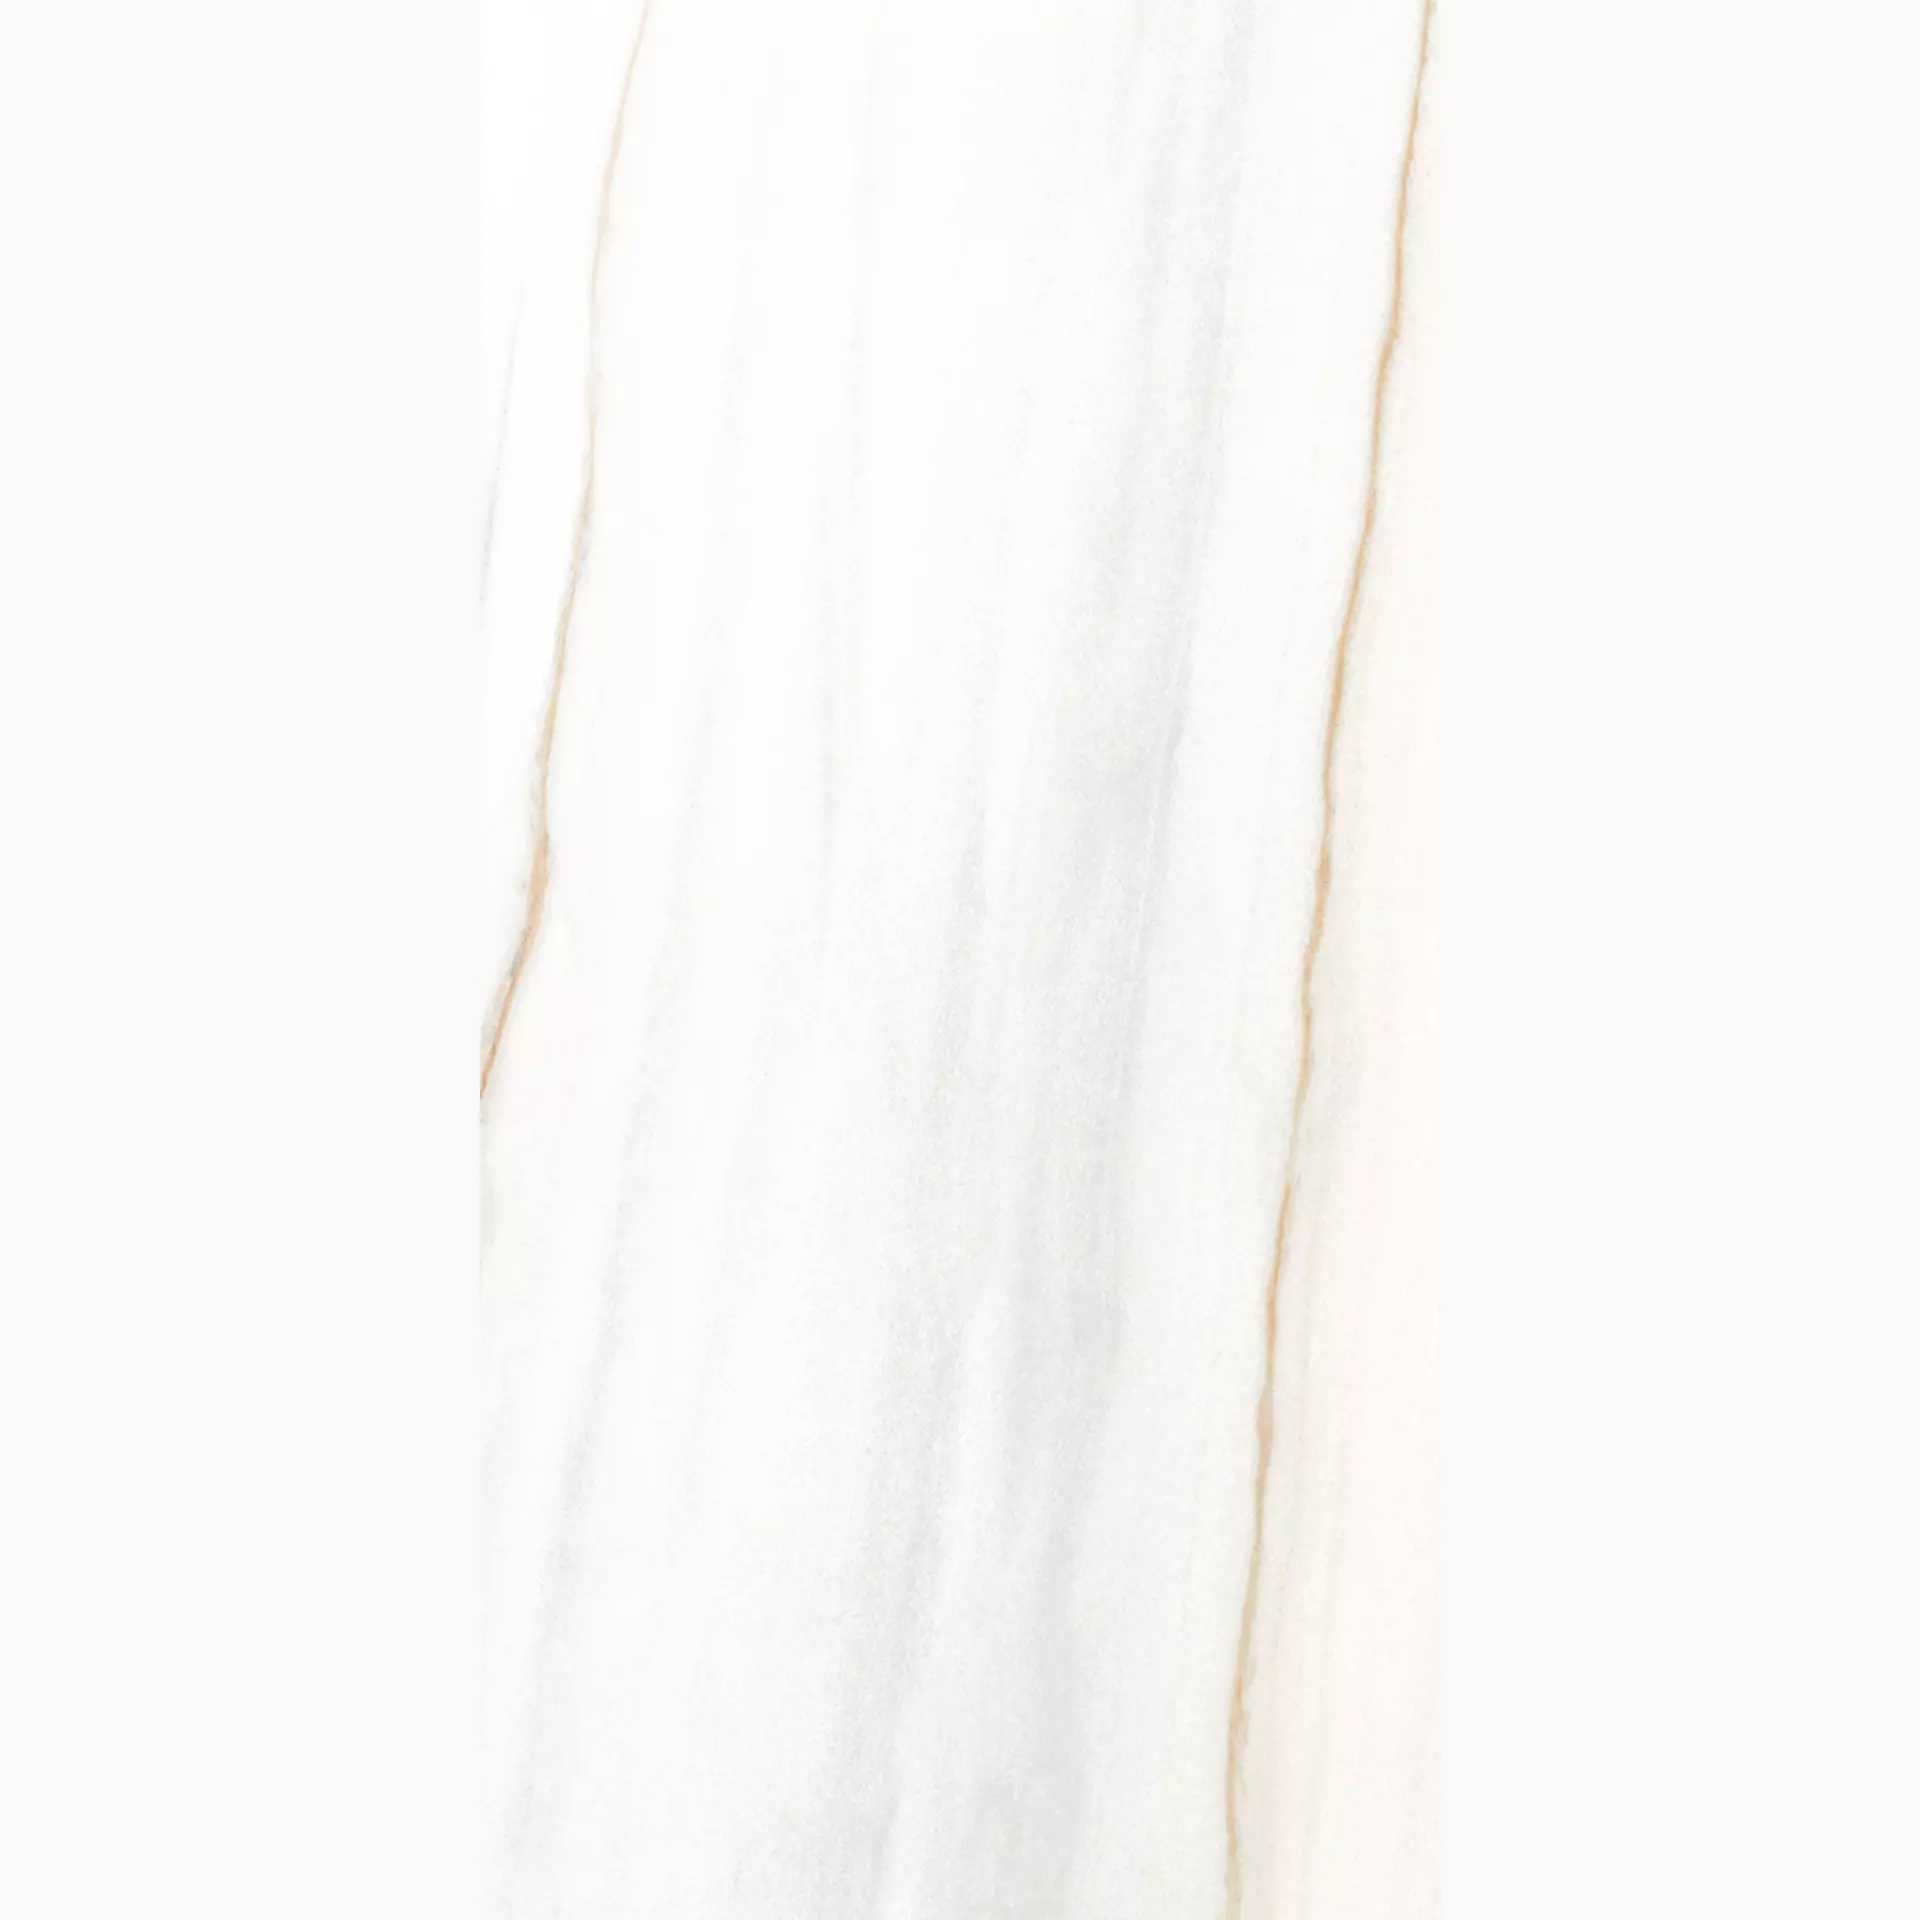 Rondine Canova Lasa White Lappato J88895 30x60cm rectified 8,5mm